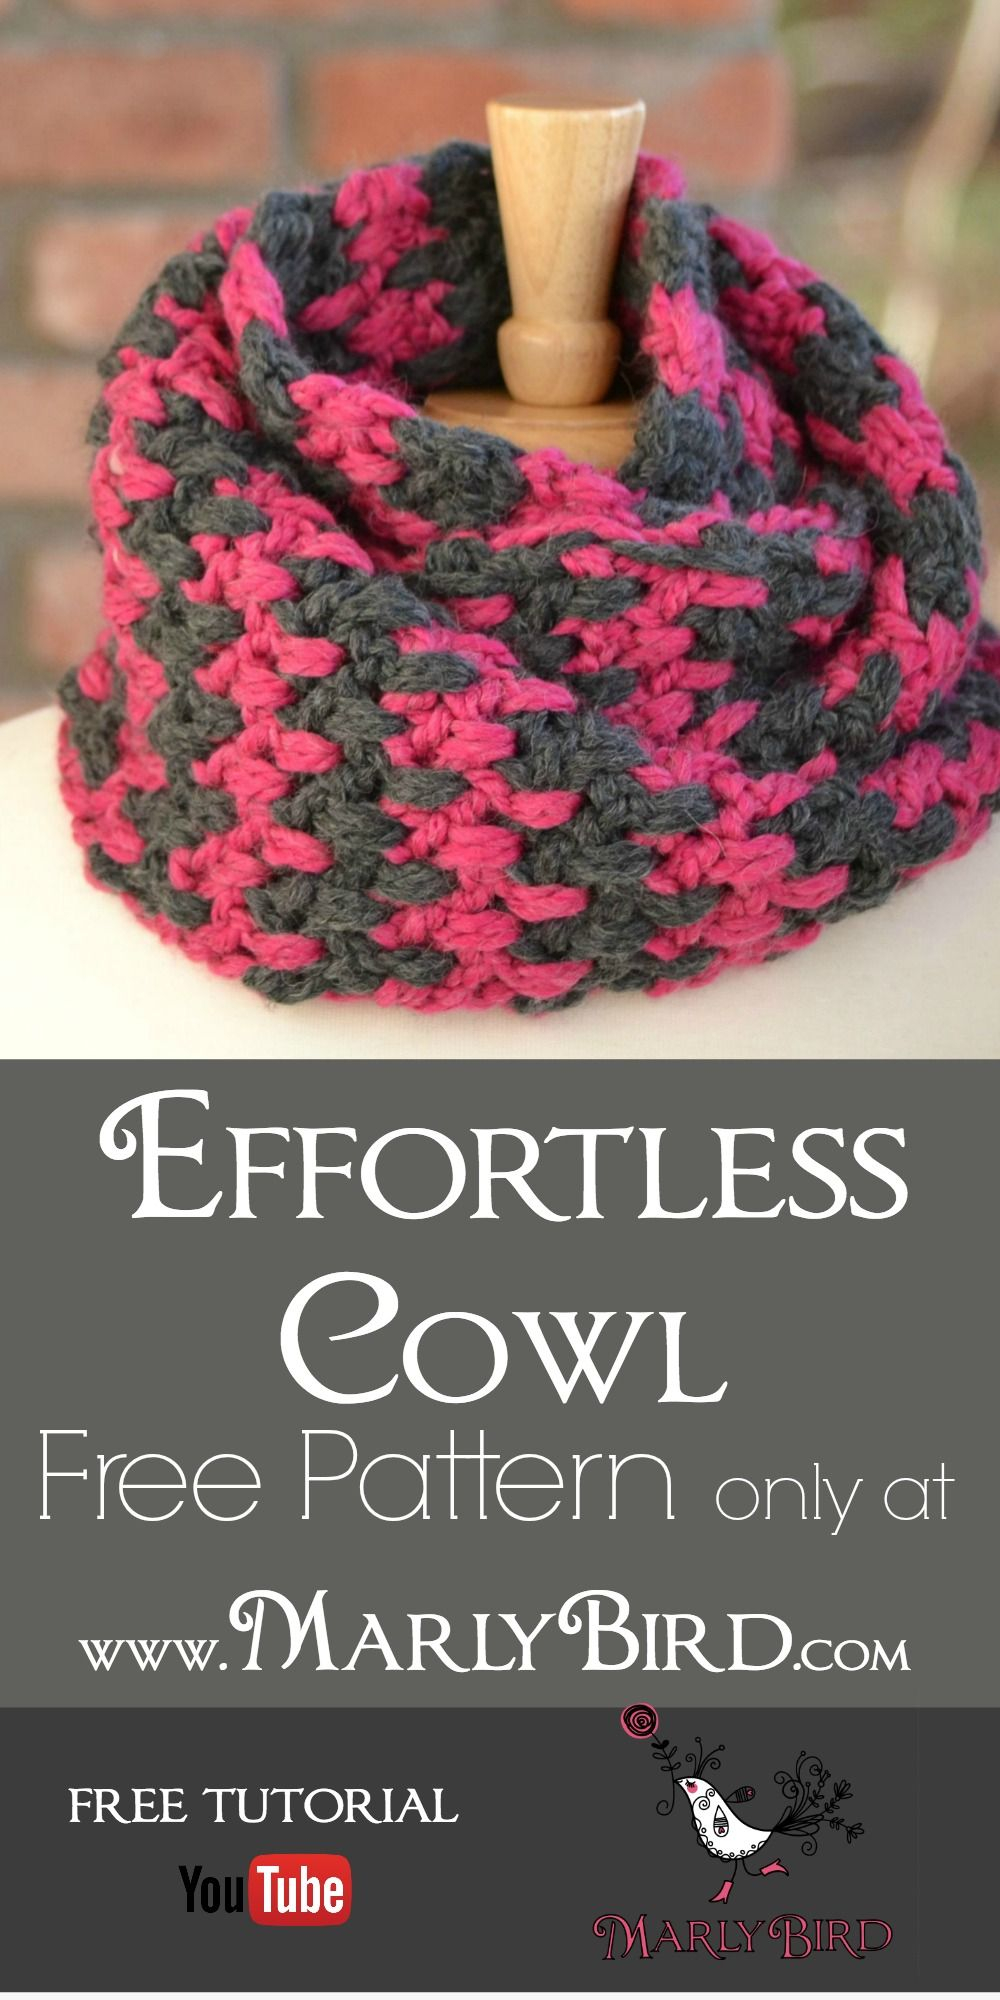 Super Bulky Yarn Crochet Scarf Pattern Free Crochet Cowl Pattern Effortless Crochet Scarves Pinterest